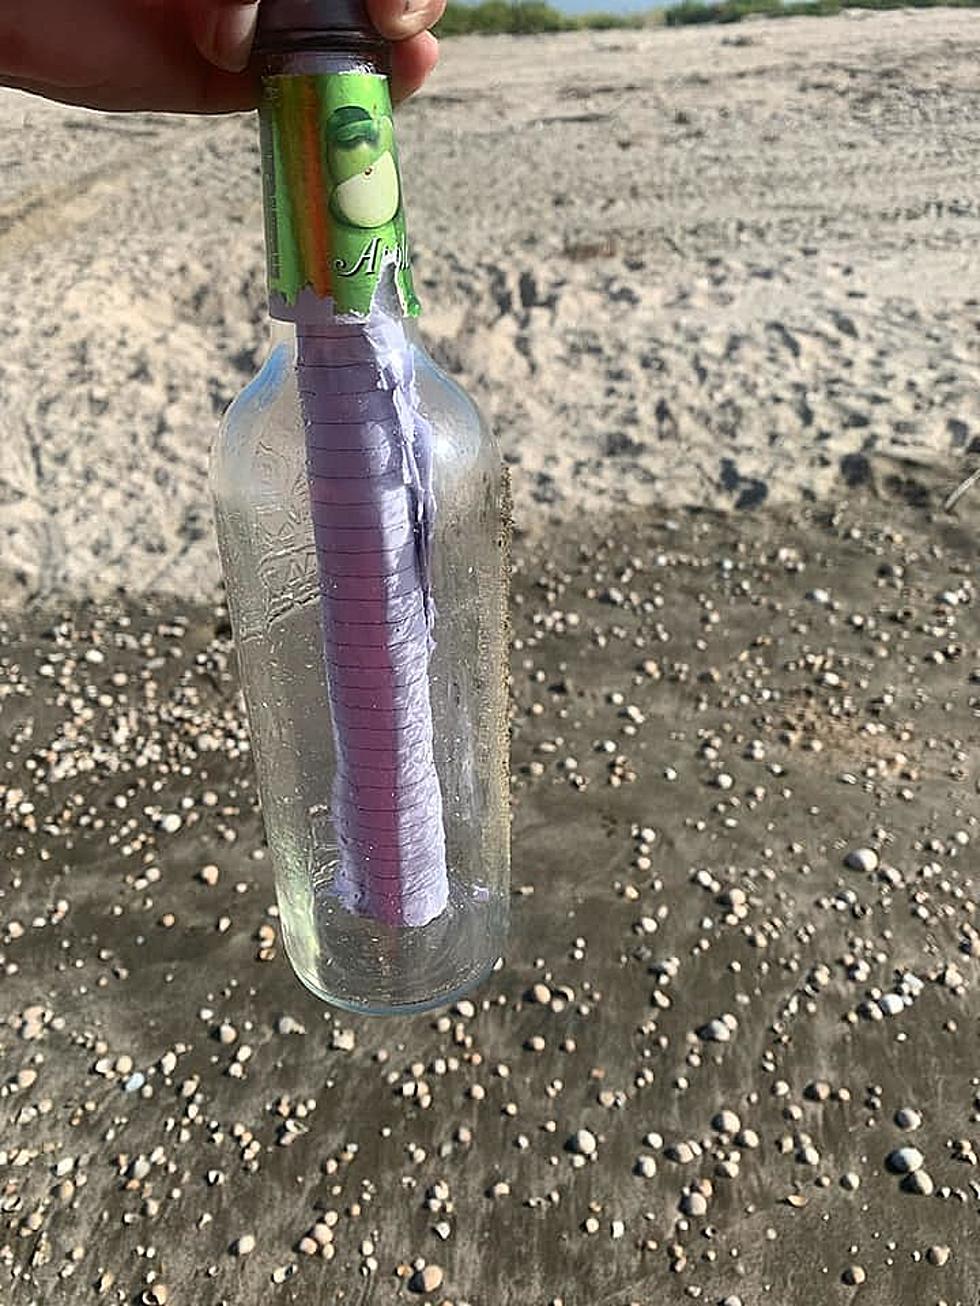 Heartbreaking Messages in a Bottle Wash Ashore near Cameron, Louisiana